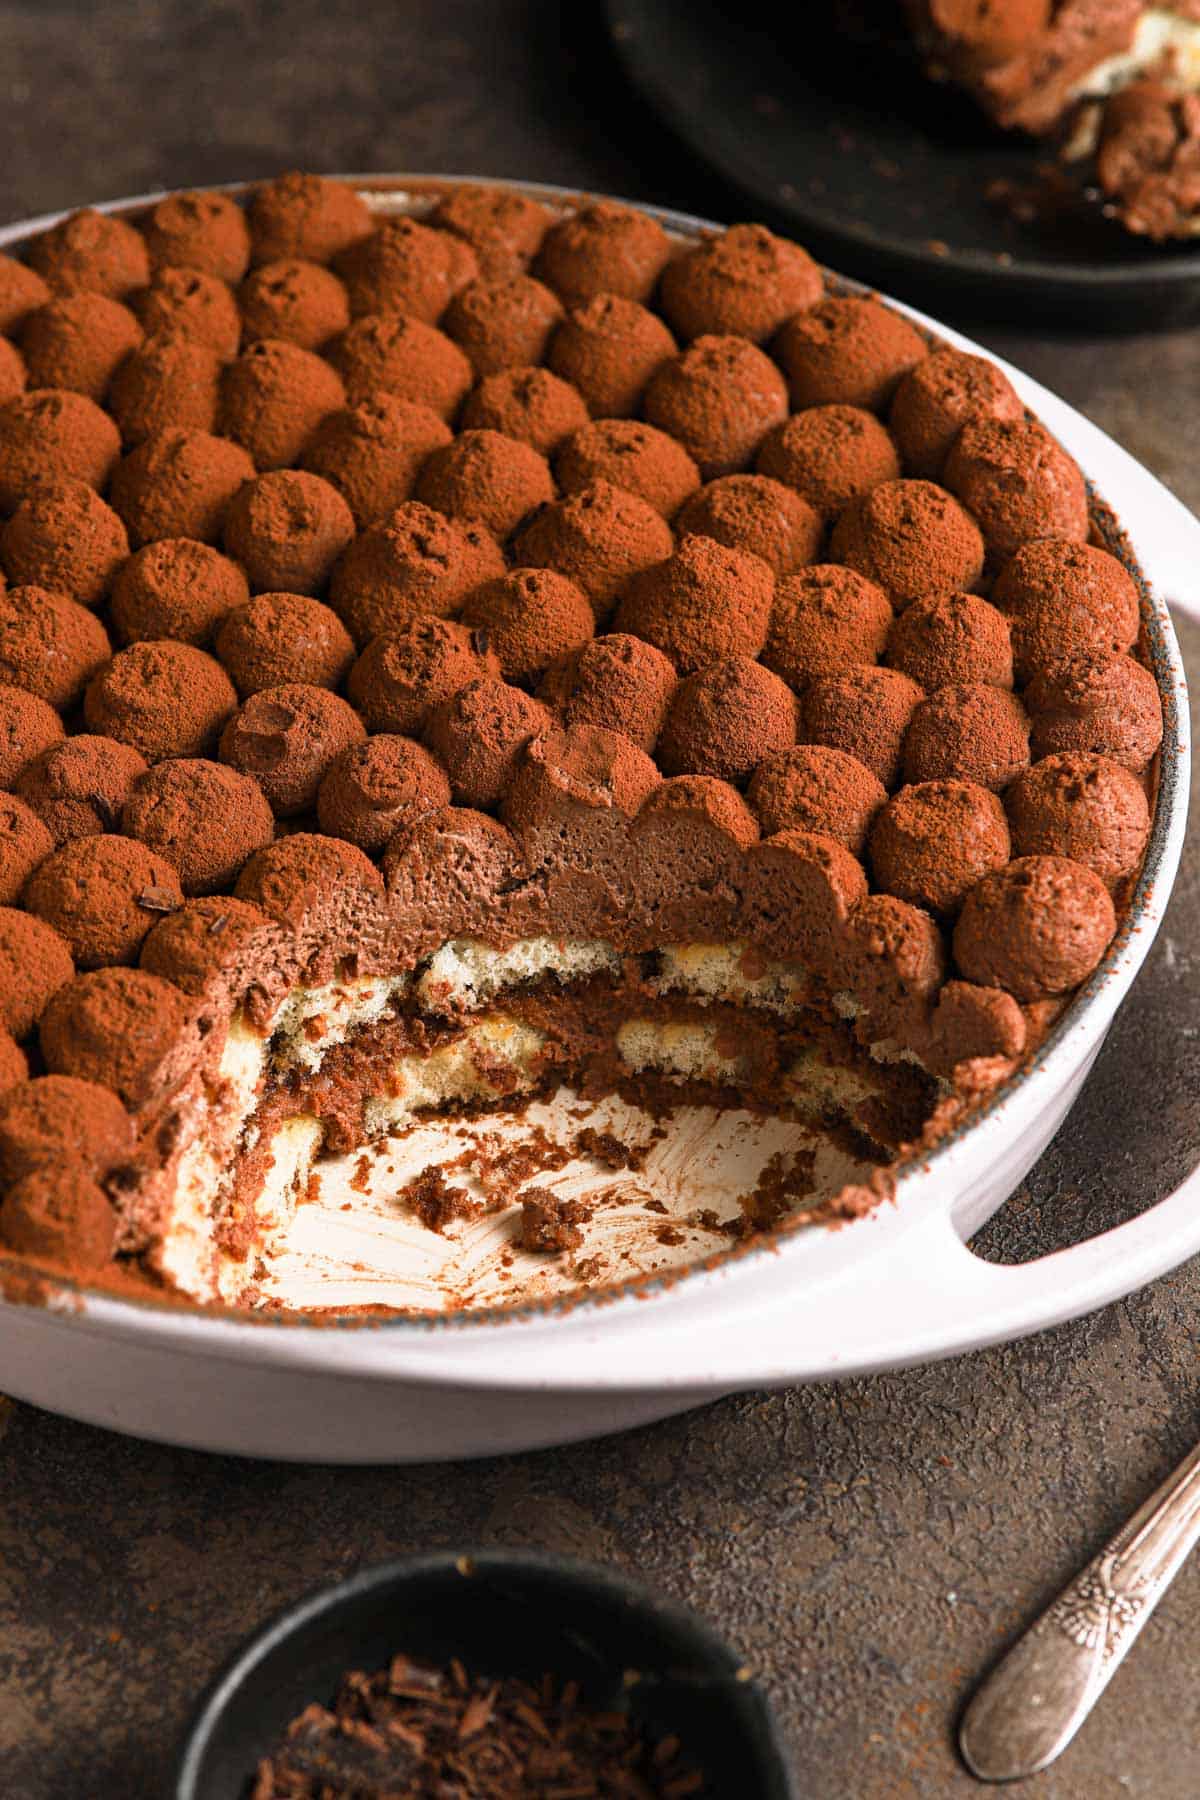 layers of chocolate mascarpone cream and ladyfingers cookies.